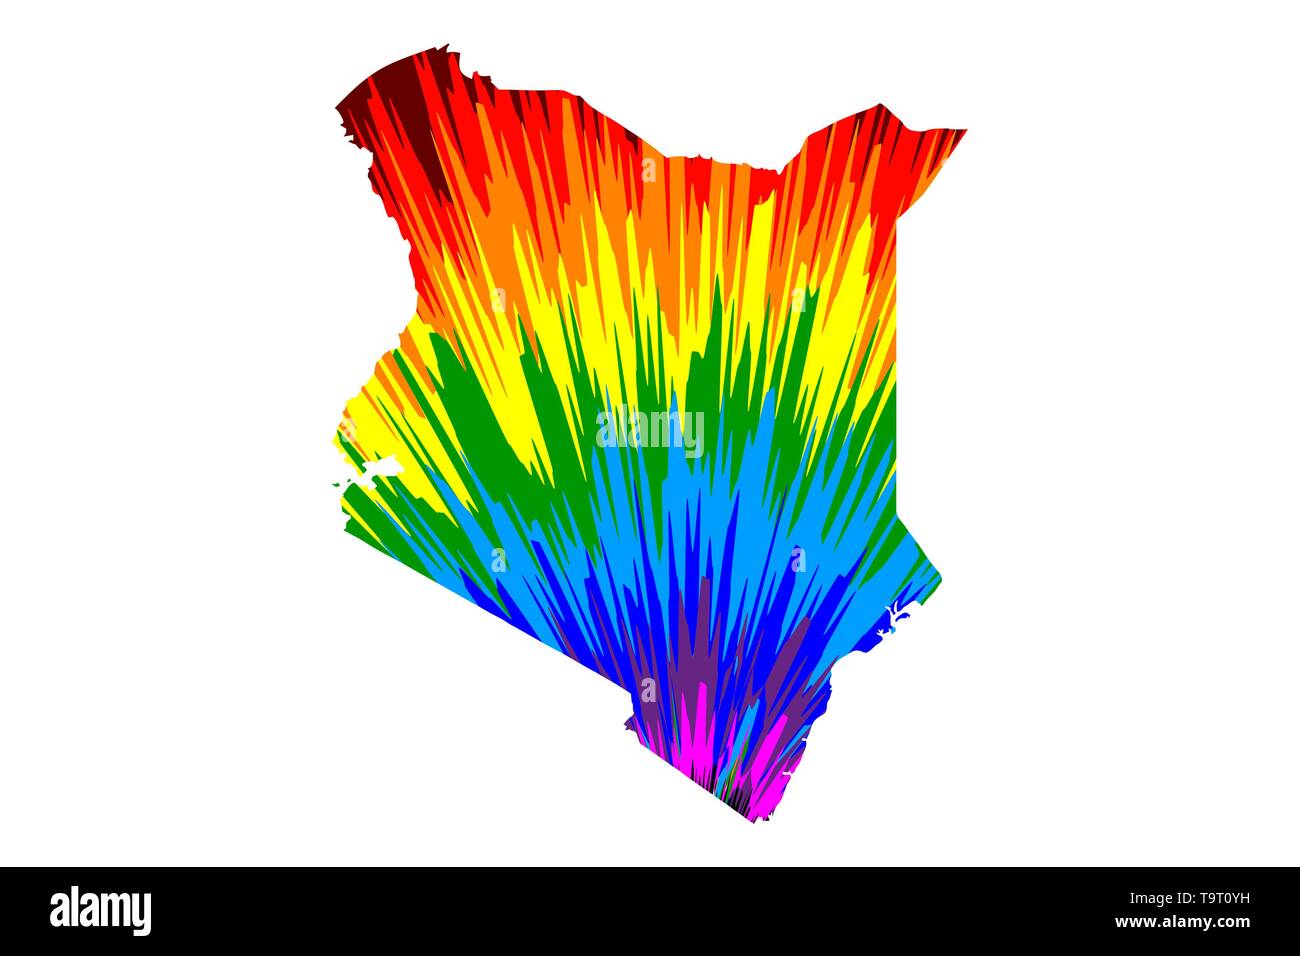 Kenia - Karte ist Rainbow abstrakte farbenfrohe Muster entworfen, der Republik Kenia Karte aus Farbe Explosion, Stock Vektor